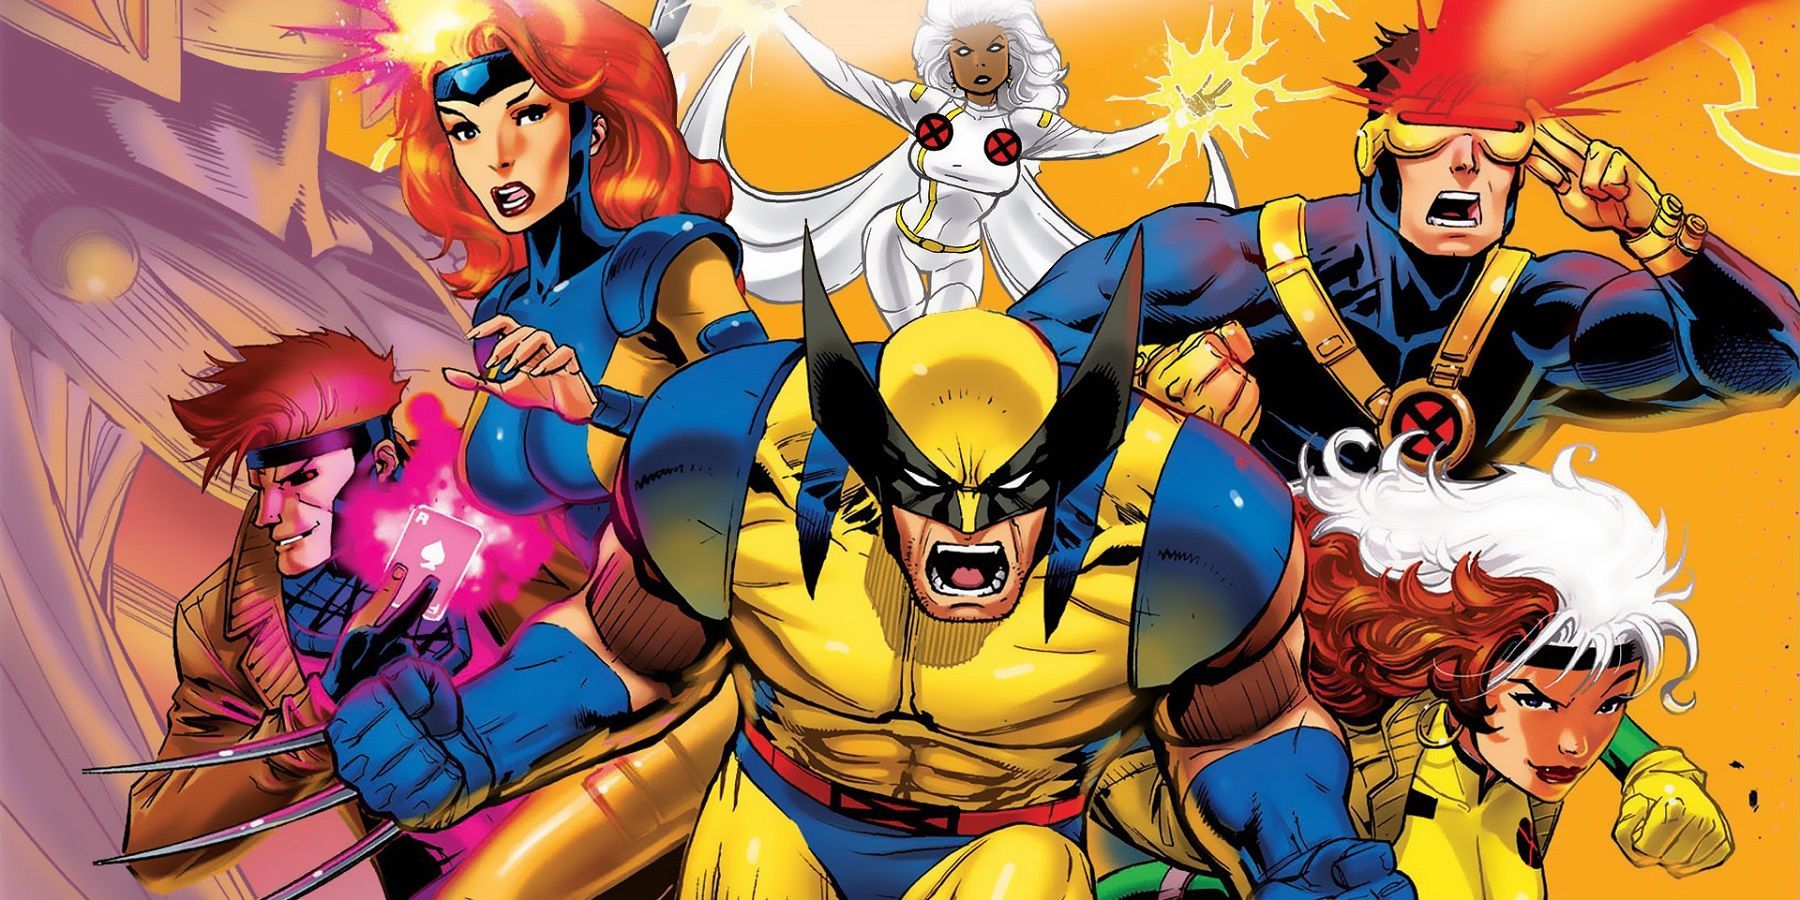 X-Men '97 Video Reveals Major Update For Marvel Show